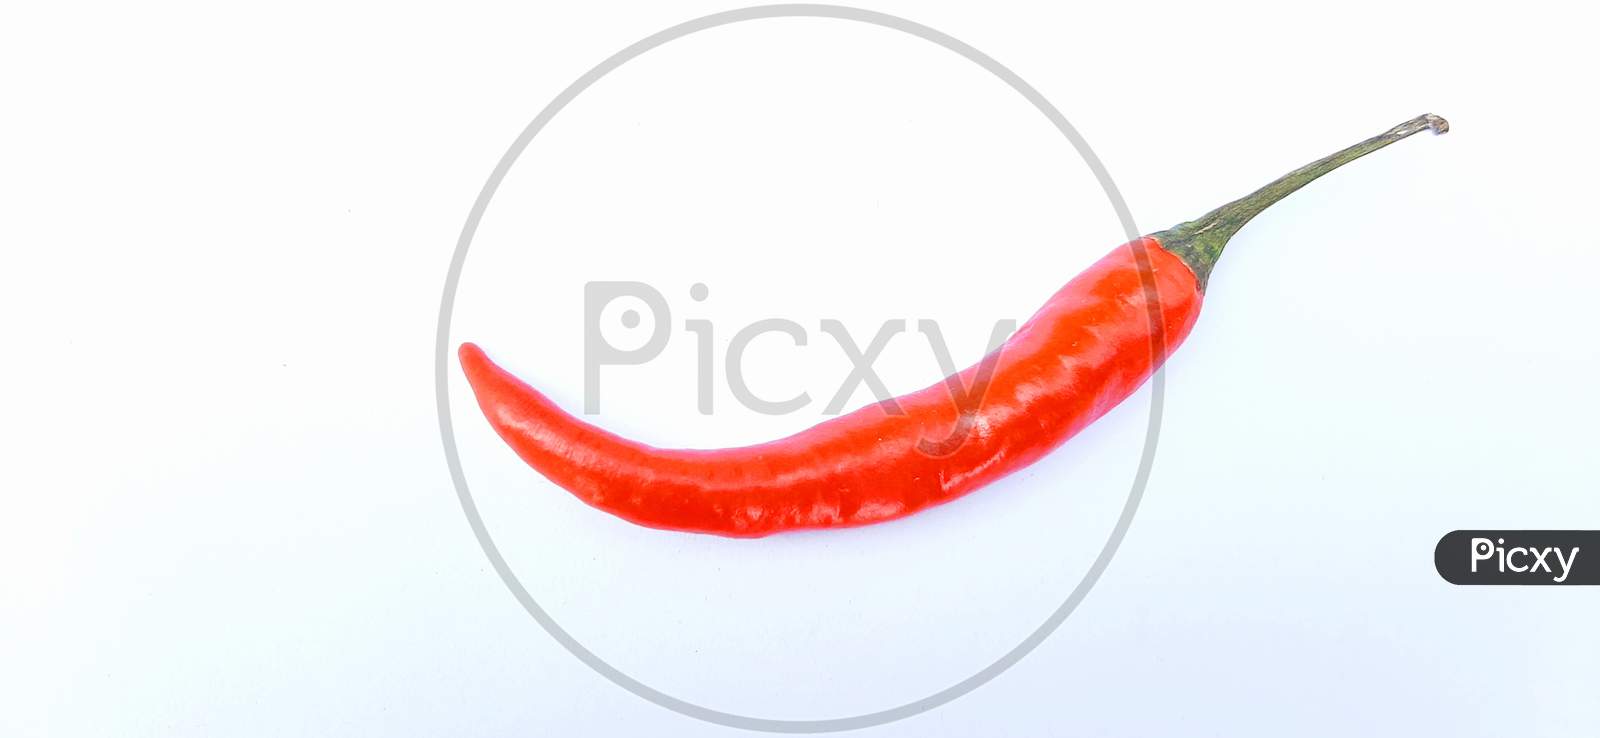 Chili Hot Spicy Red Fresh White Background